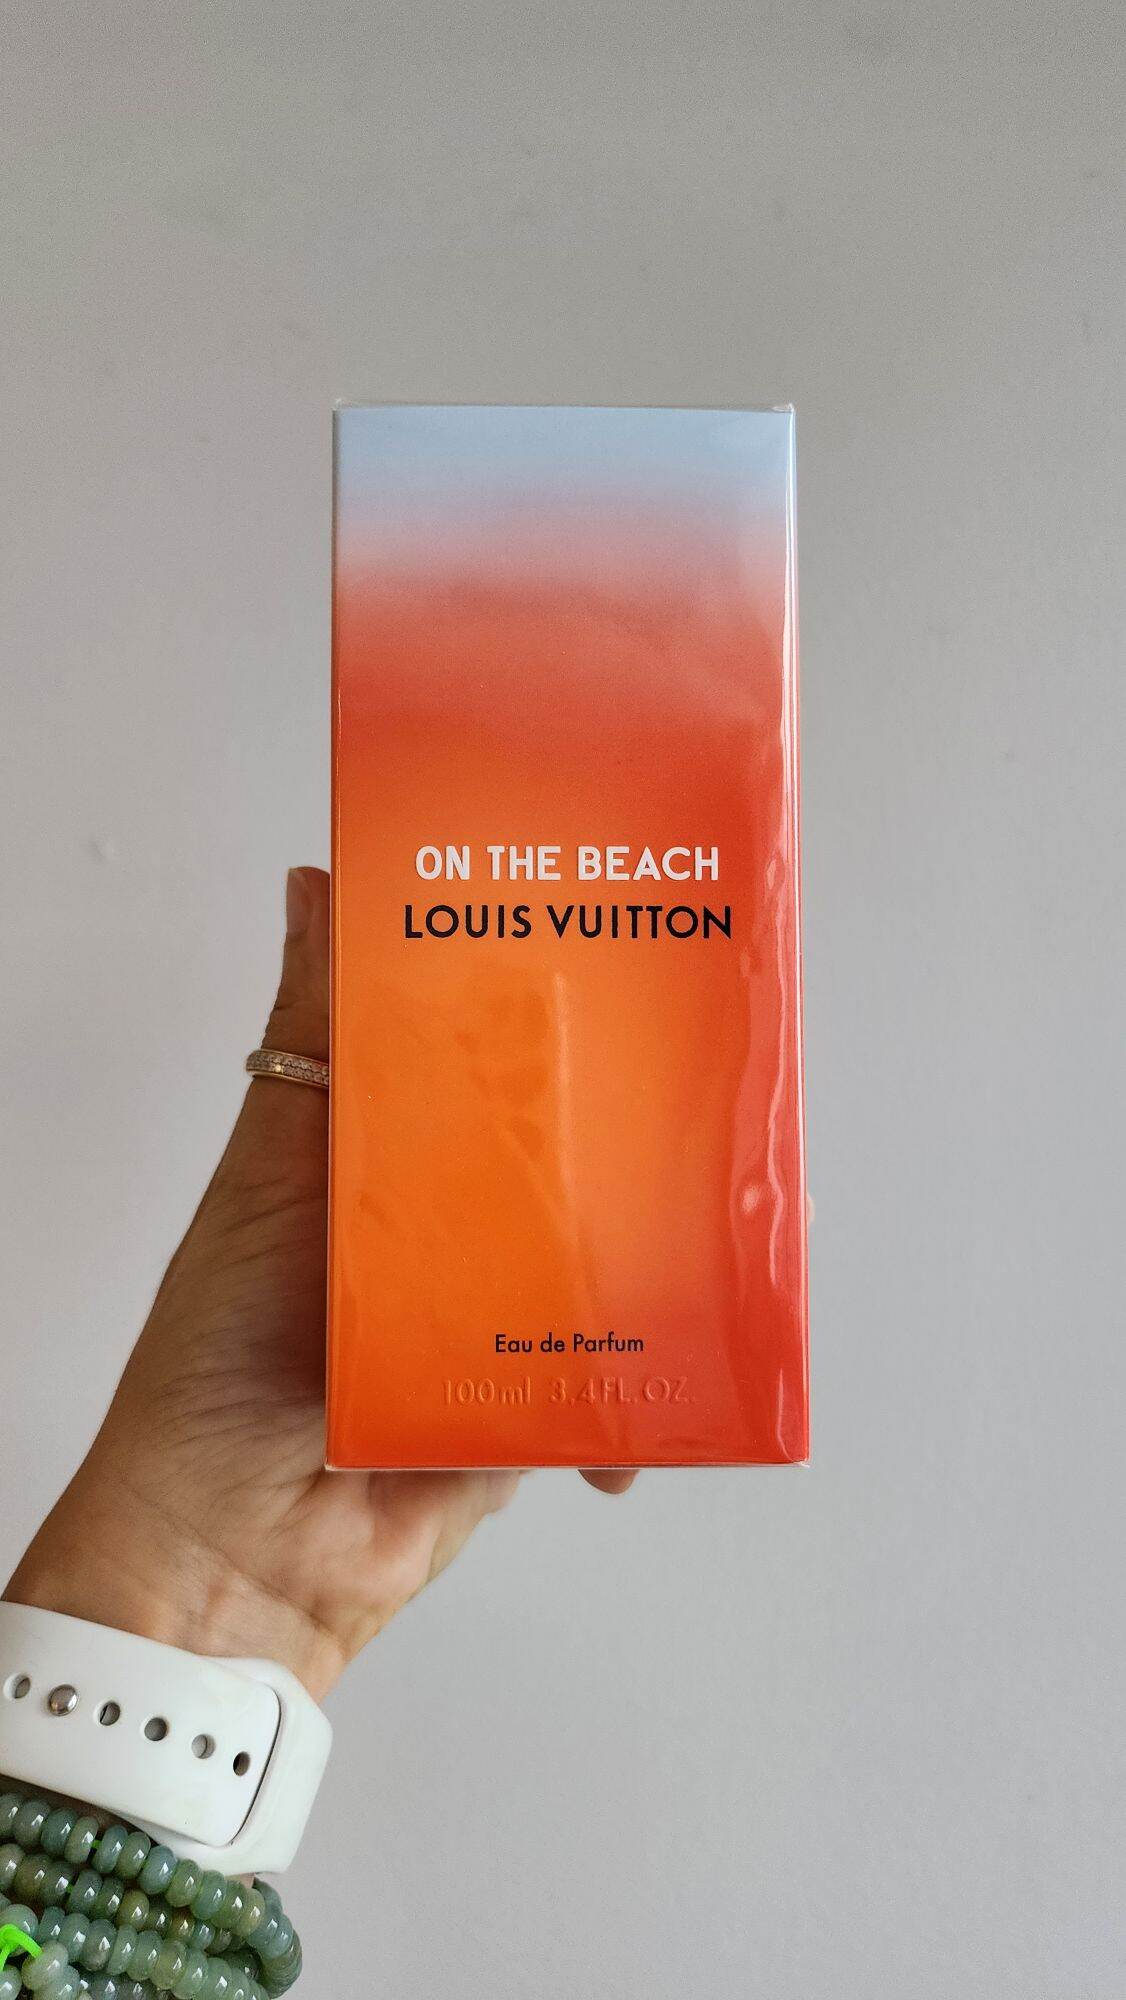 ᴛᴇsᴛᴇʀ Nước Hoa Louis Vuitton On The Beach  510   Hazomicom  Mua  Sắm Trực Tuyến Số 1 Việt Nam